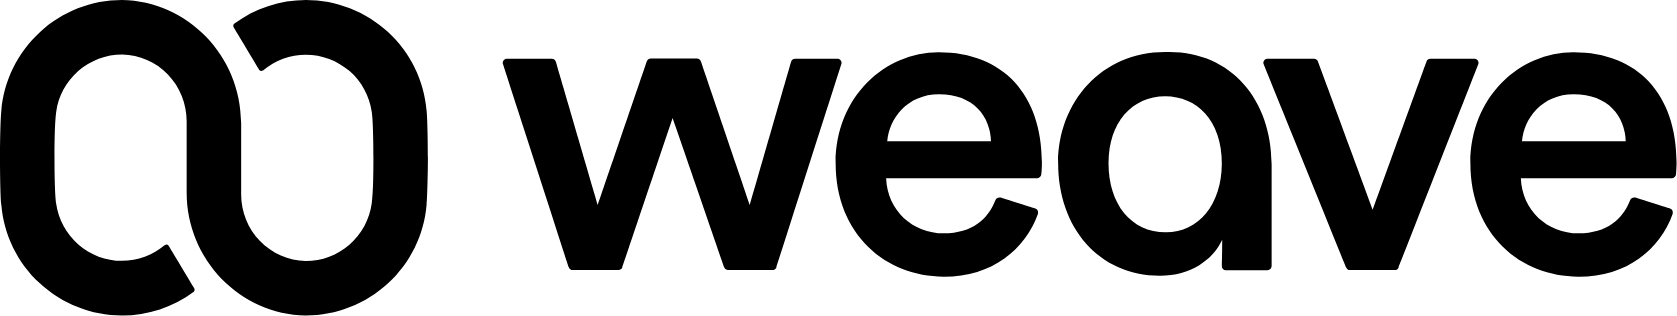 Weave Communications logo large (transparent PNG)